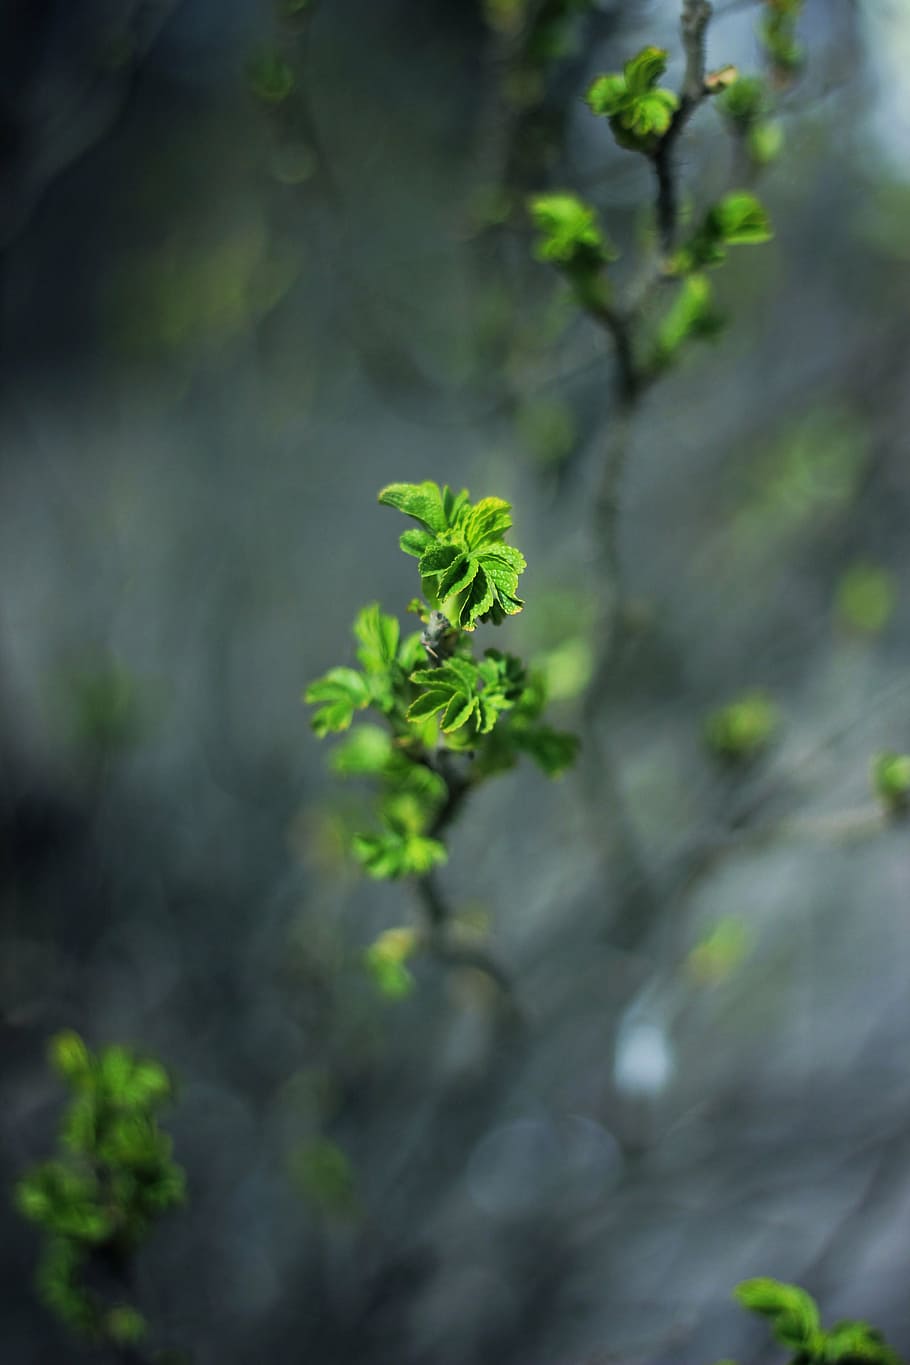 selektif, fotografi fokus, hijau, tanaman, daun, alam, blur, pertumbuhan, warna hijau, tidak ada orang